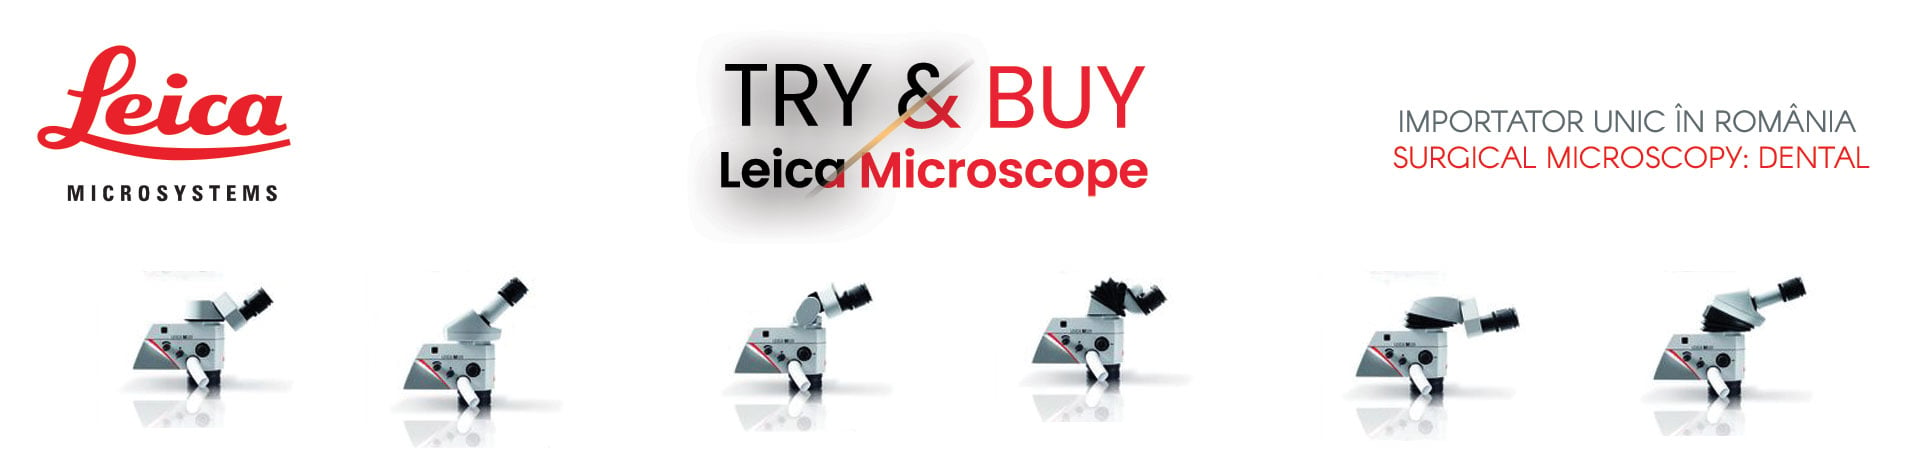 ry&Buy: Microscoape dentare Leica